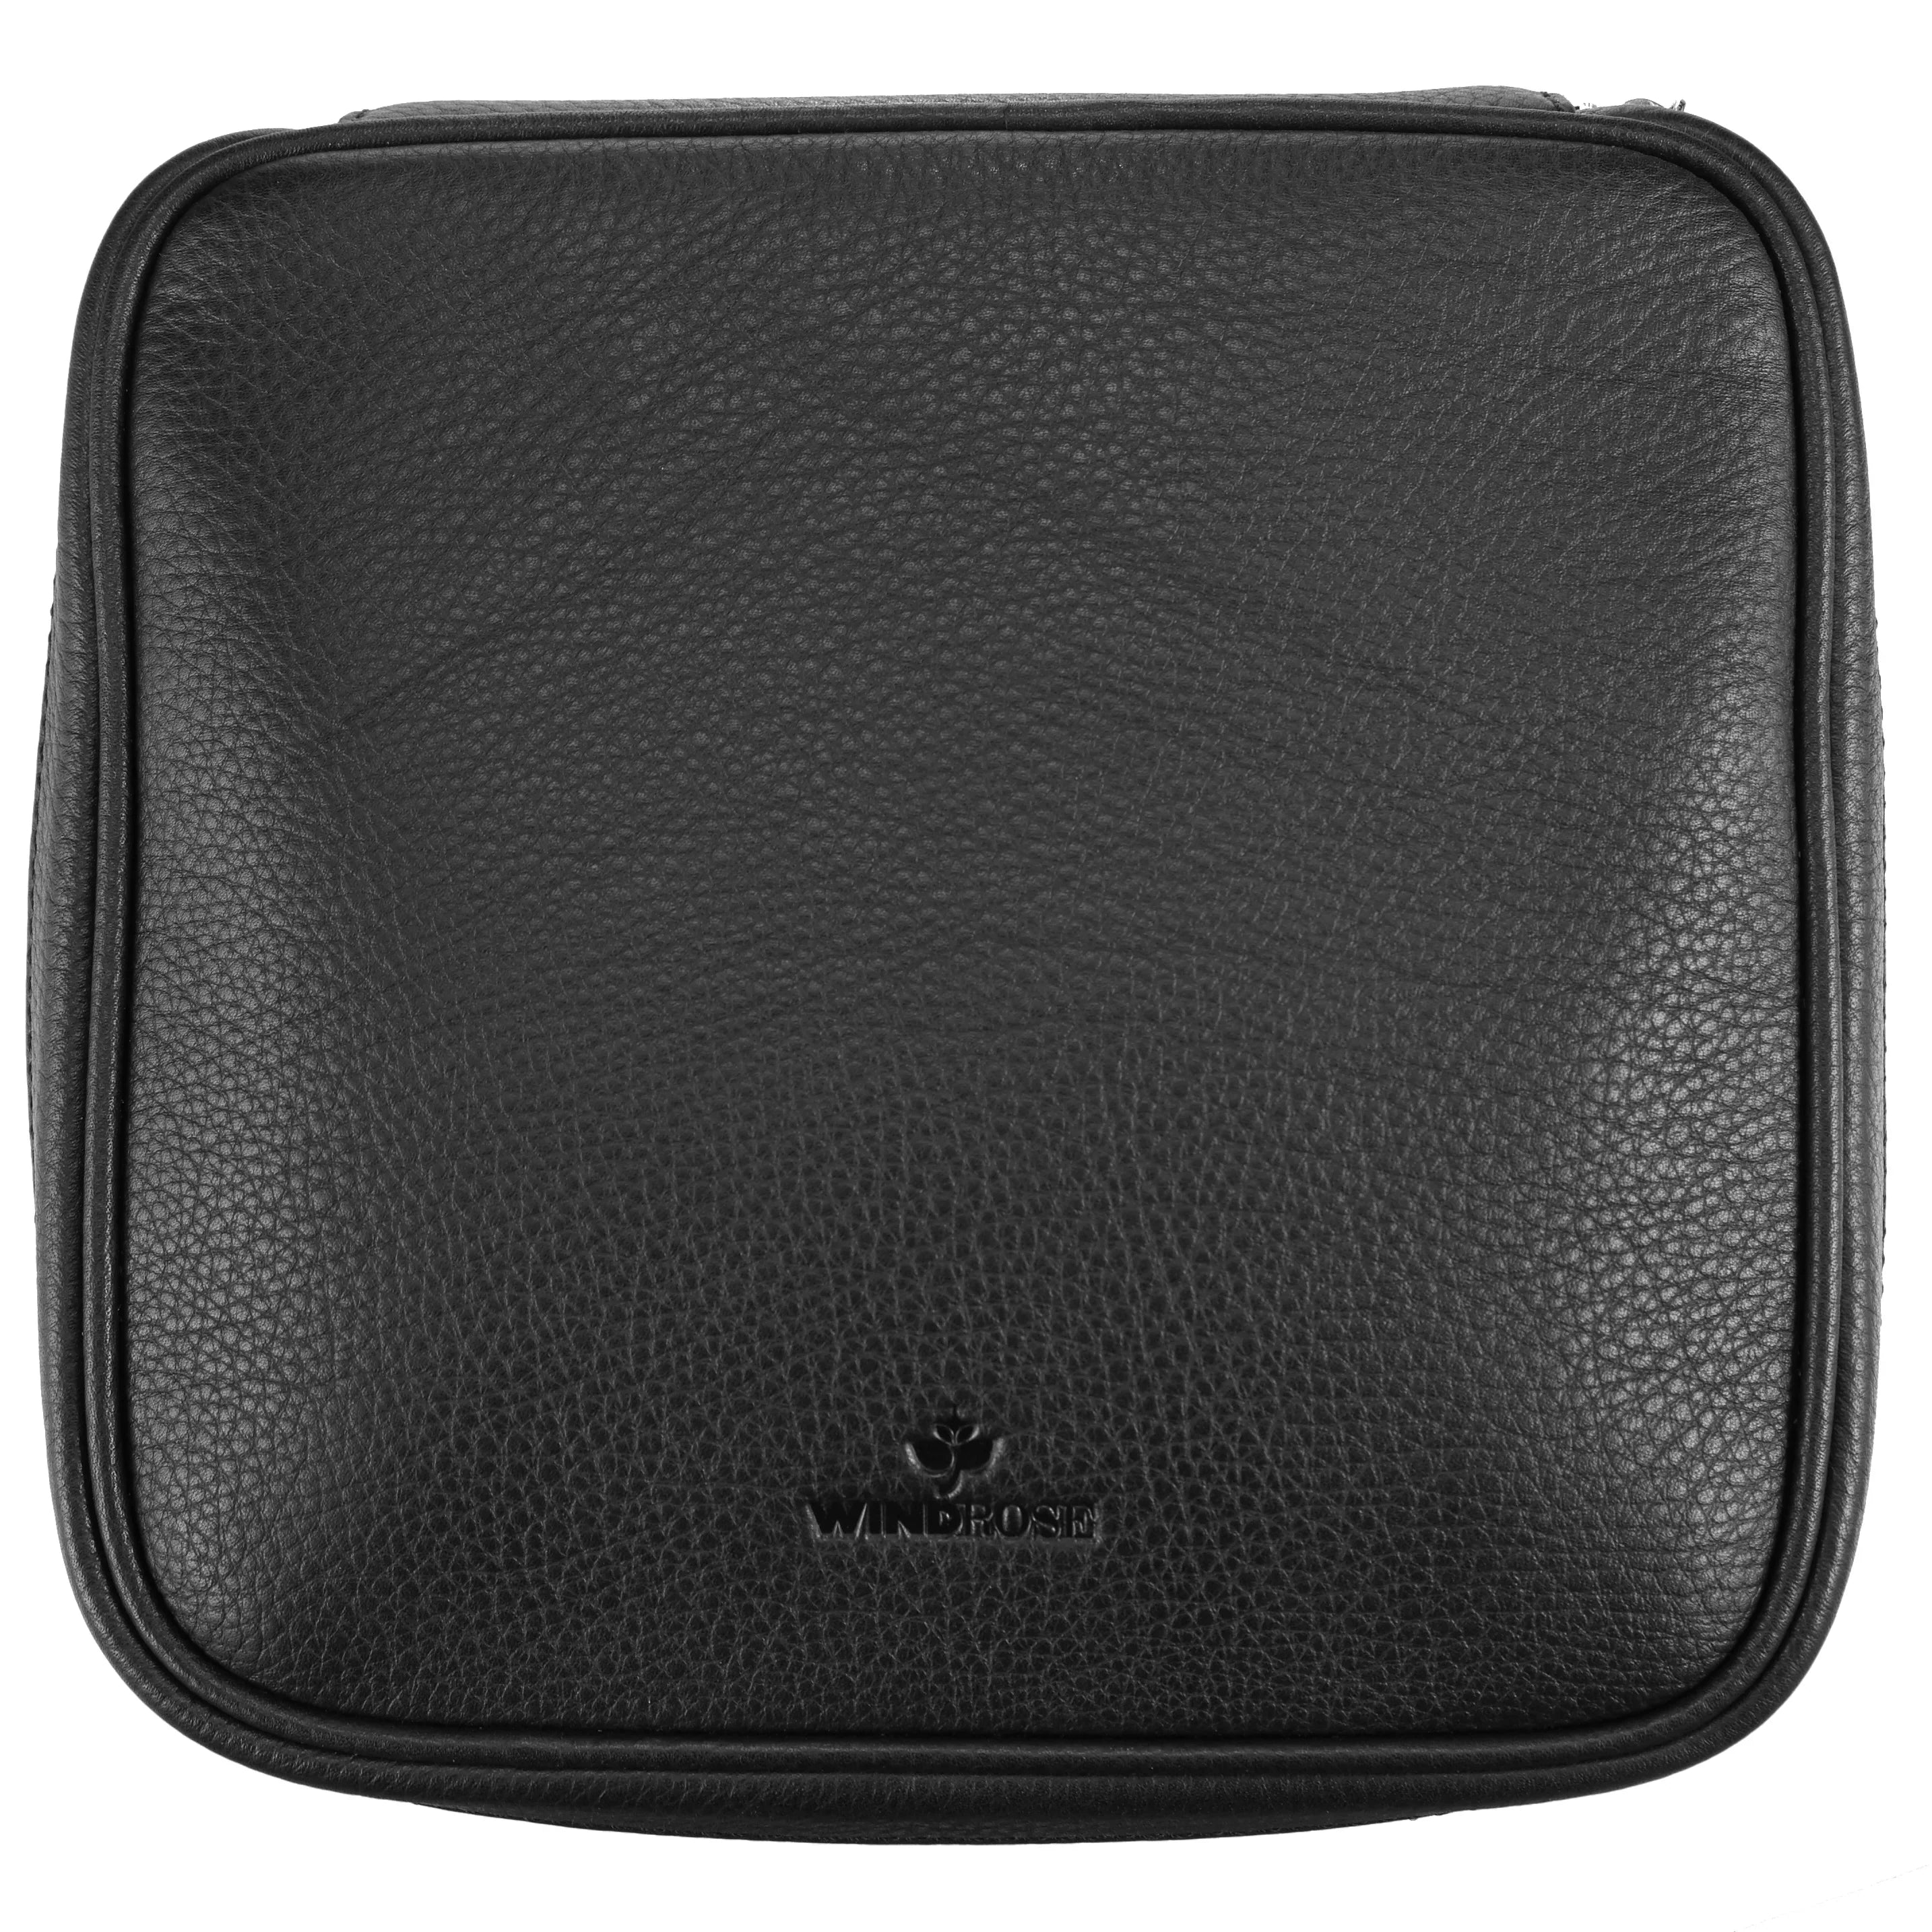 Windrose Soft jewelry case 20 cm - black